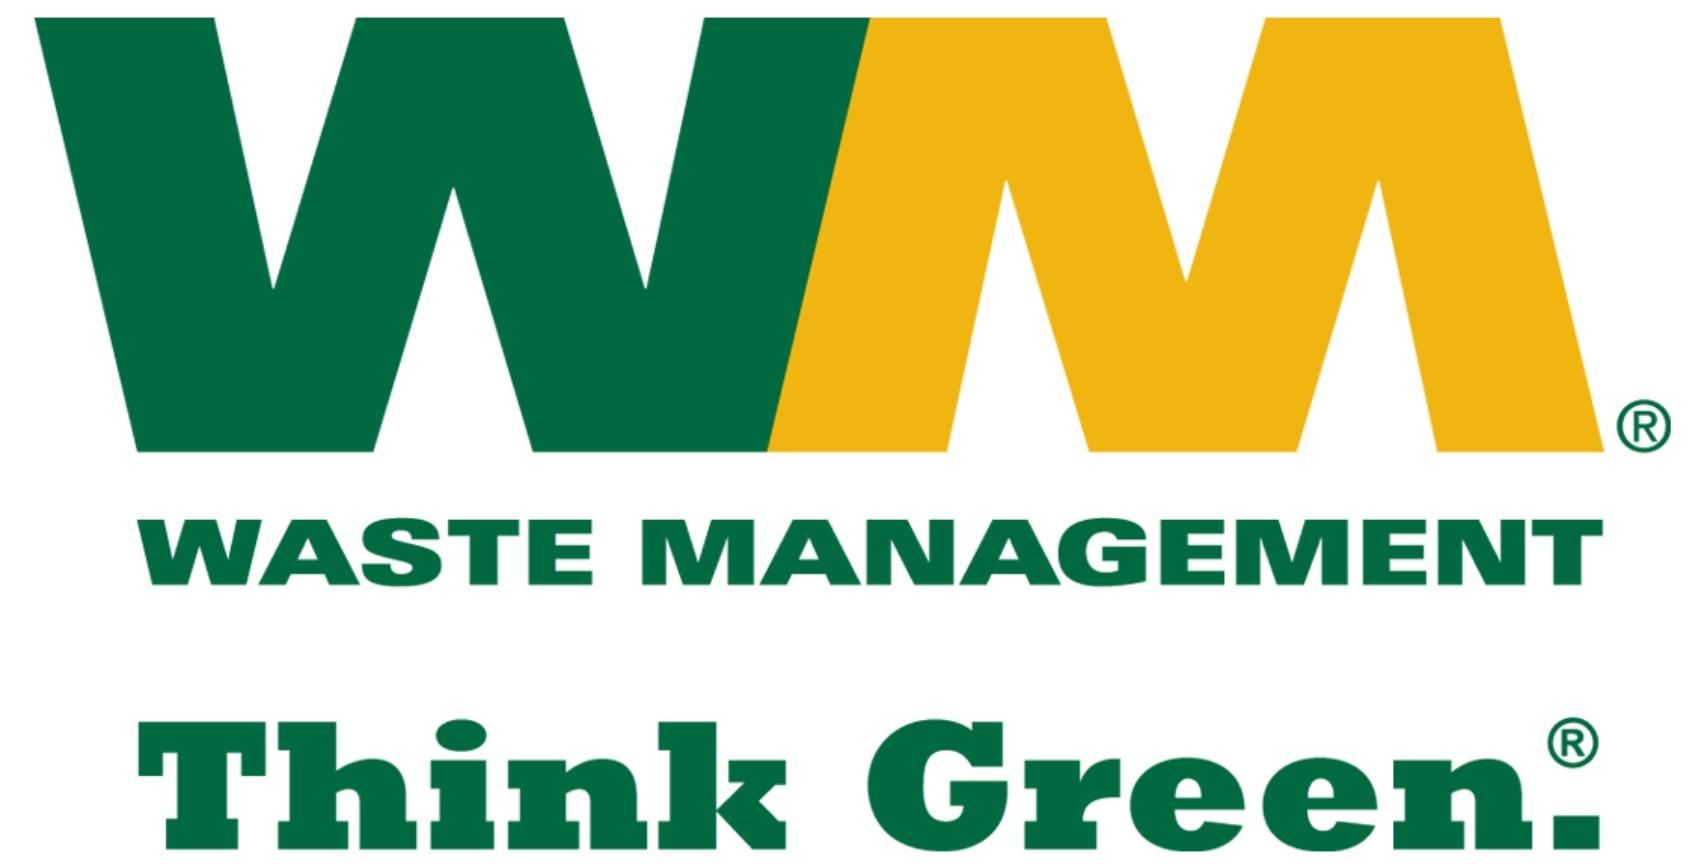 Waste Management Ready For 2018 Hurricane Season